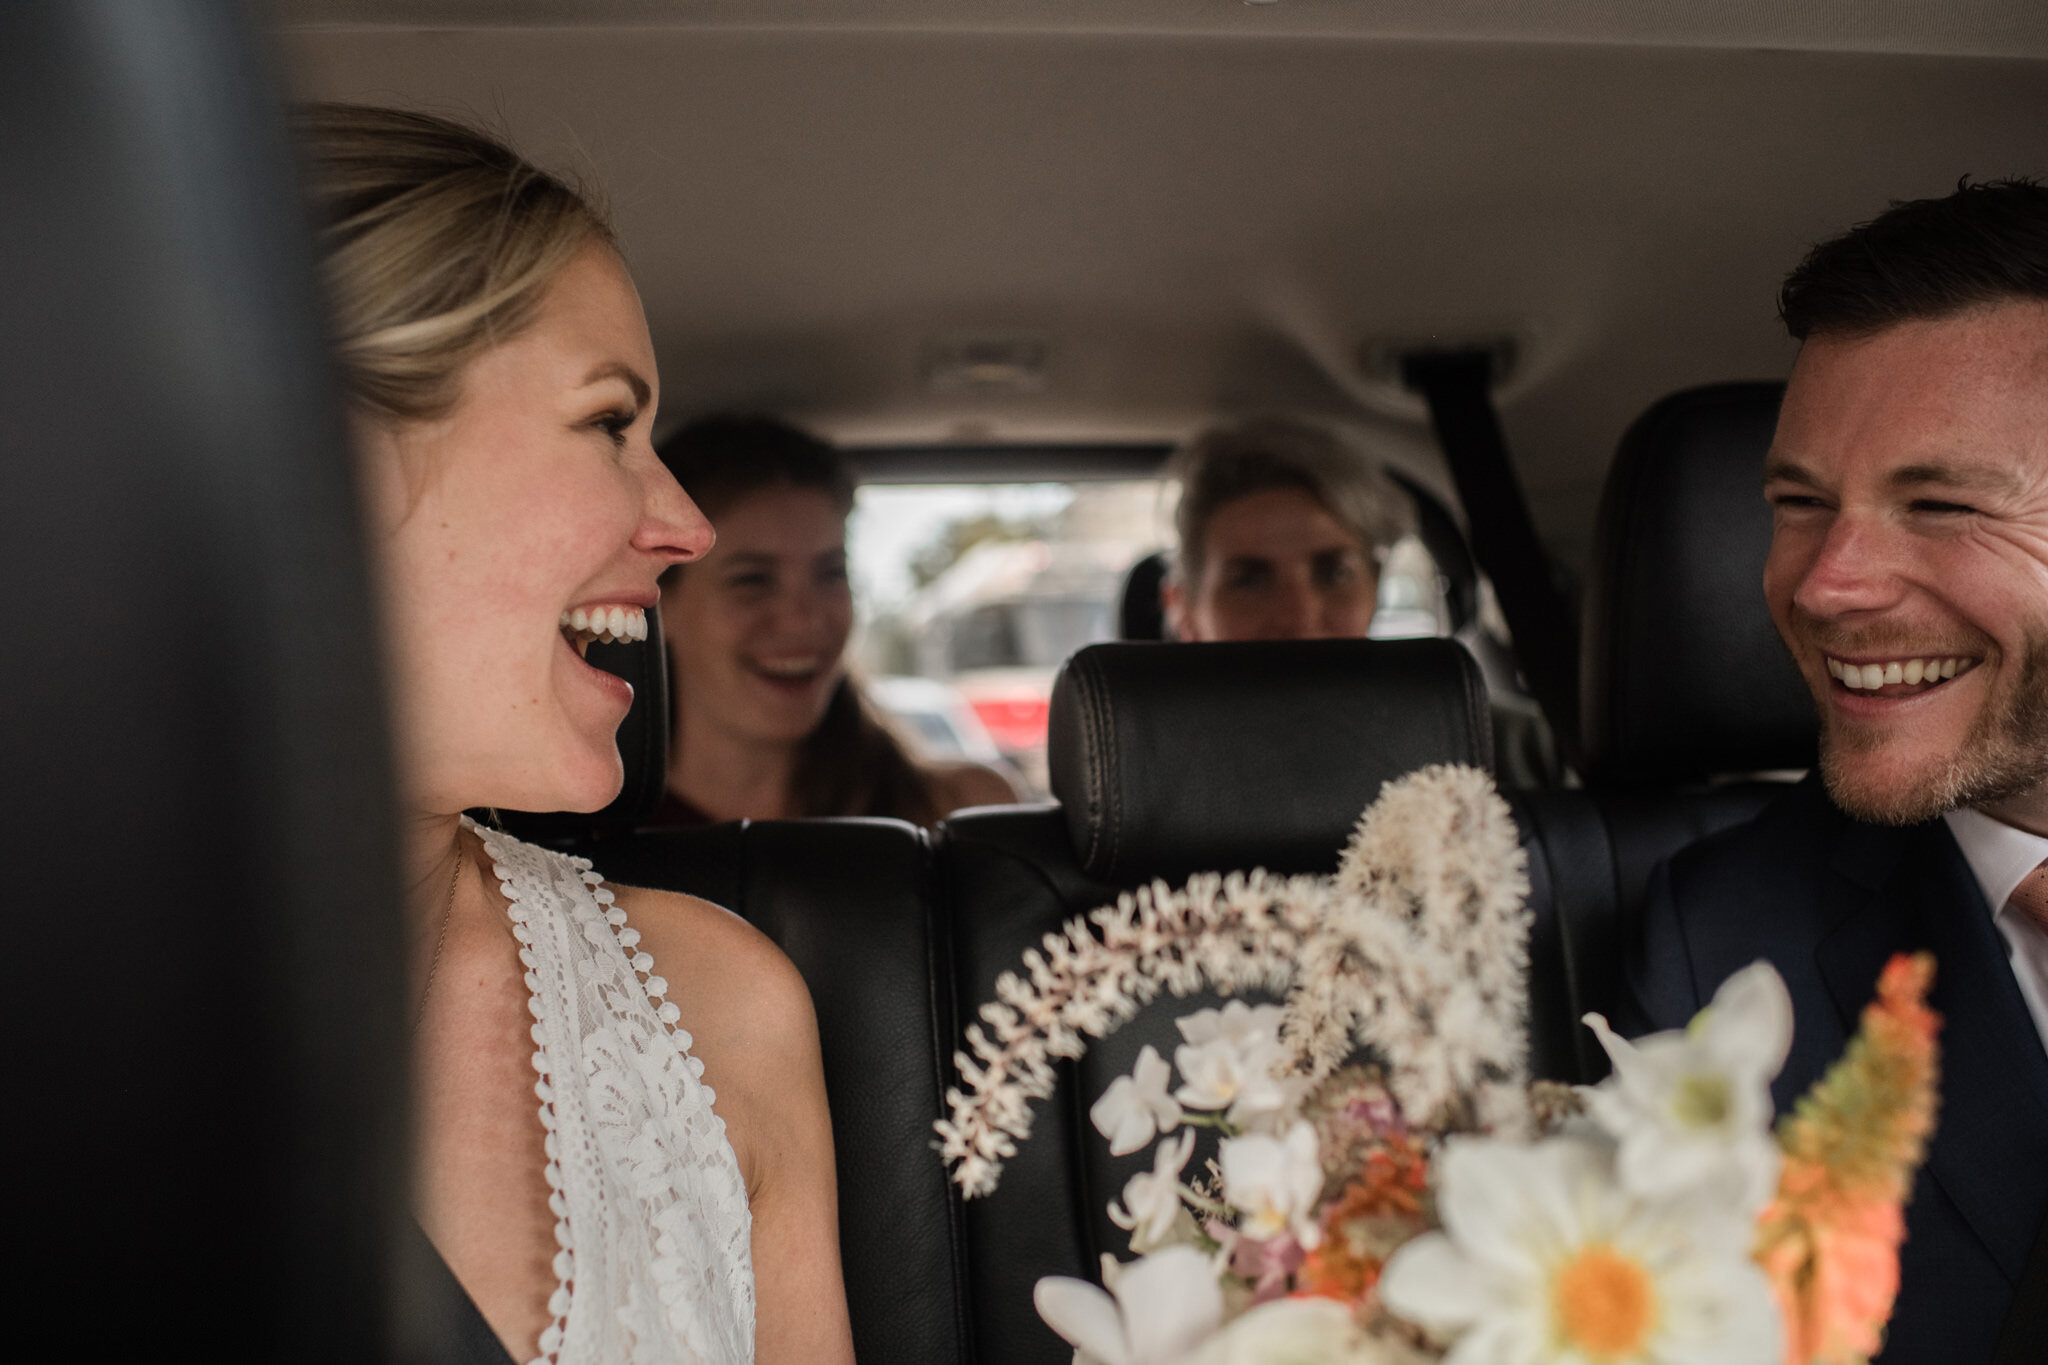 876-in-between-moment-car-bride-groom-black-white-candid-photos-brewery-wedding-toronto.jpg